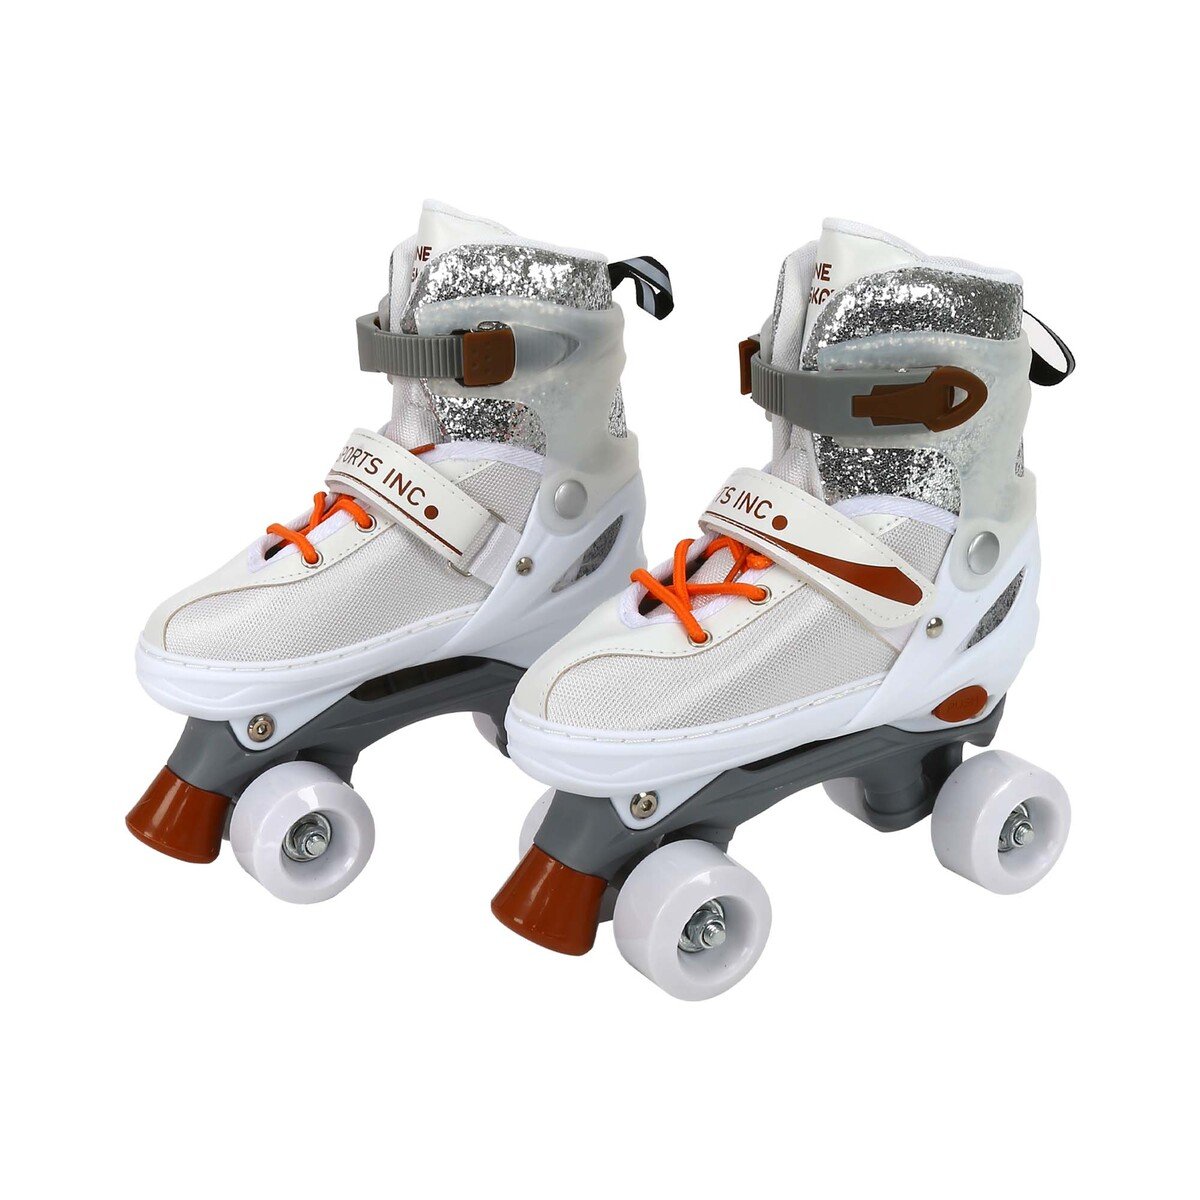 Sports Inc Skate Shoses, S M 821